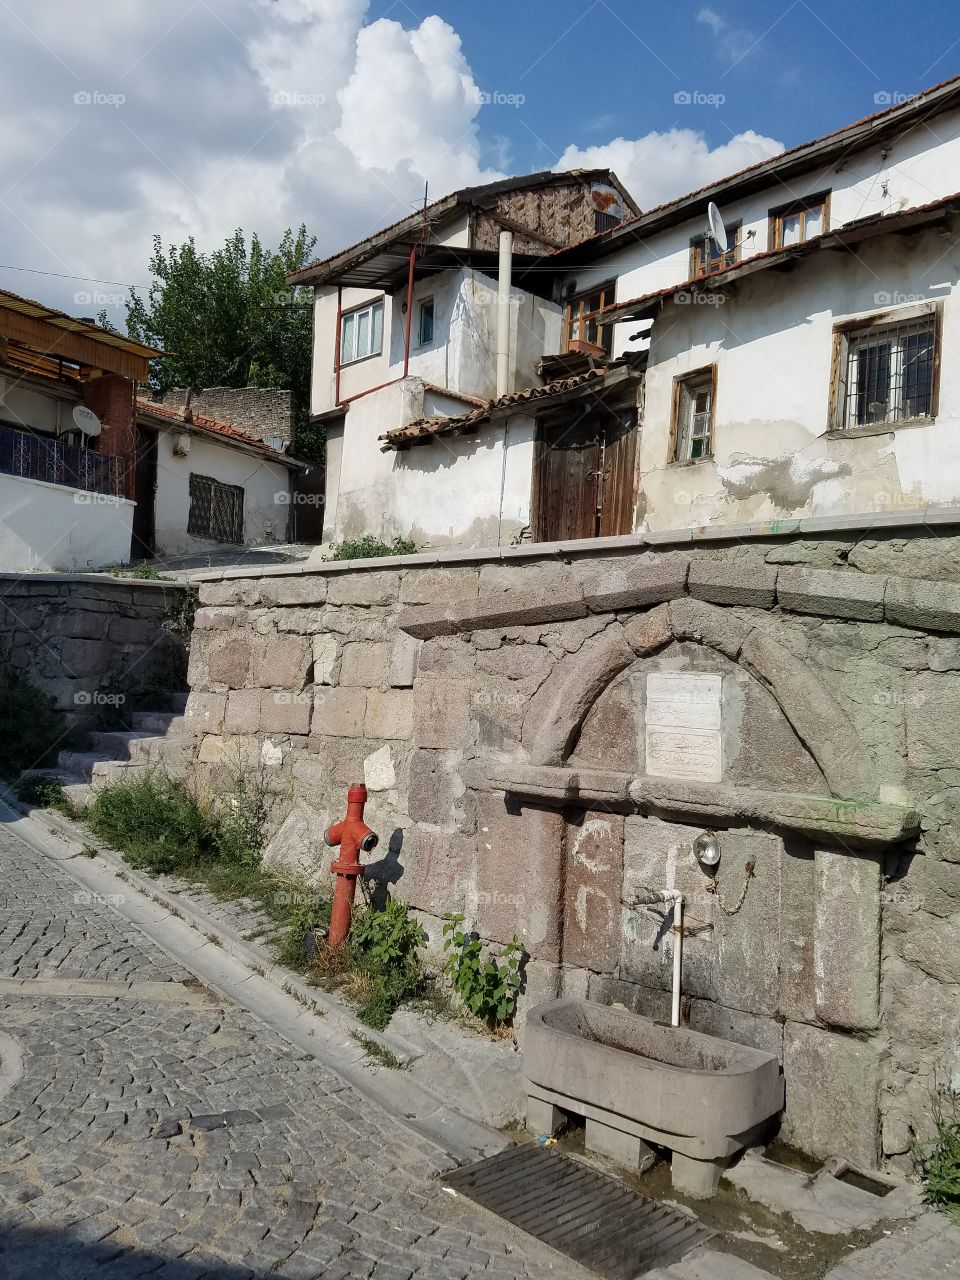 ankara old fountain and street within the ankara castle in Turkey overlooking the city